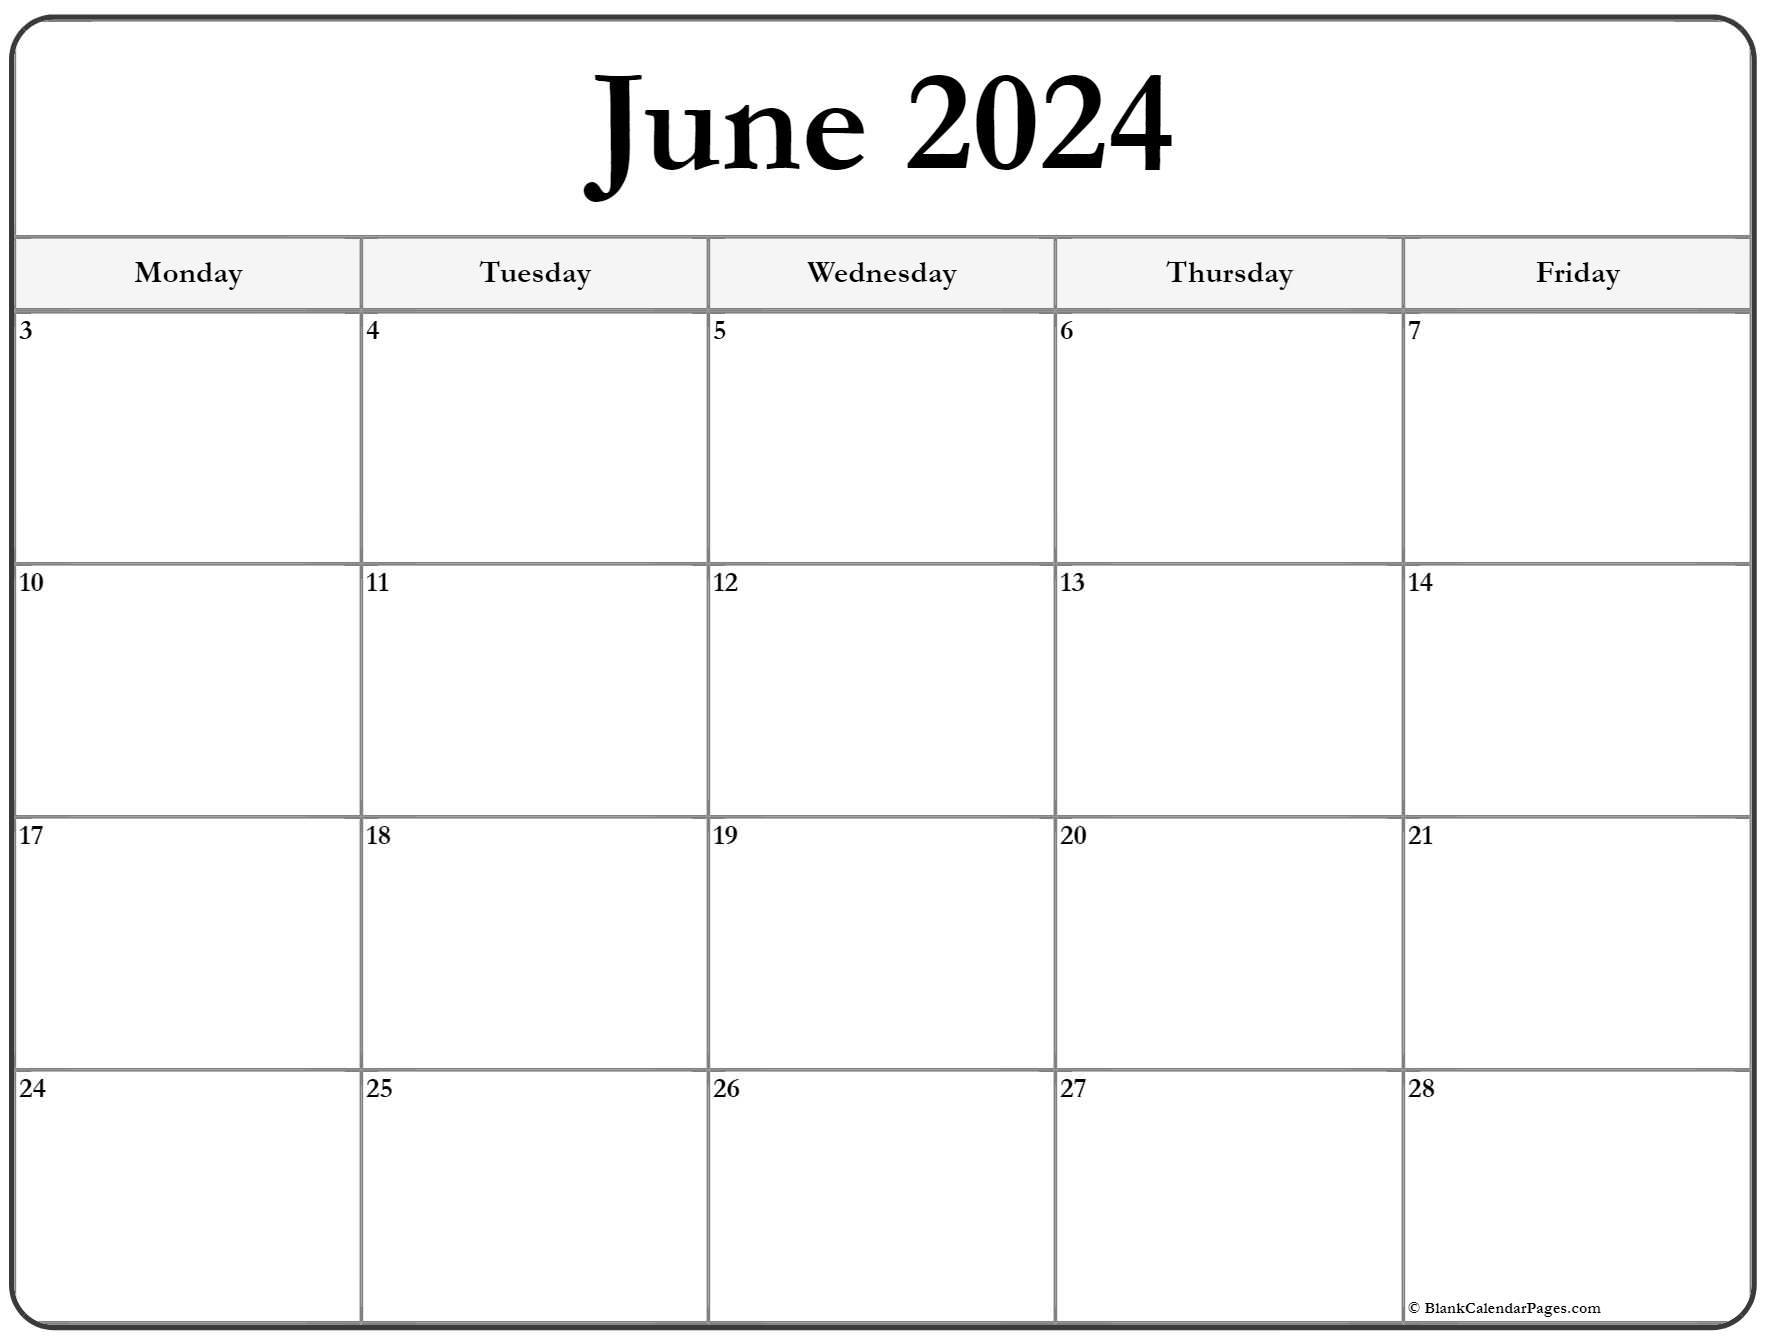 June 2023 Monday Calendar Monday To Sunday